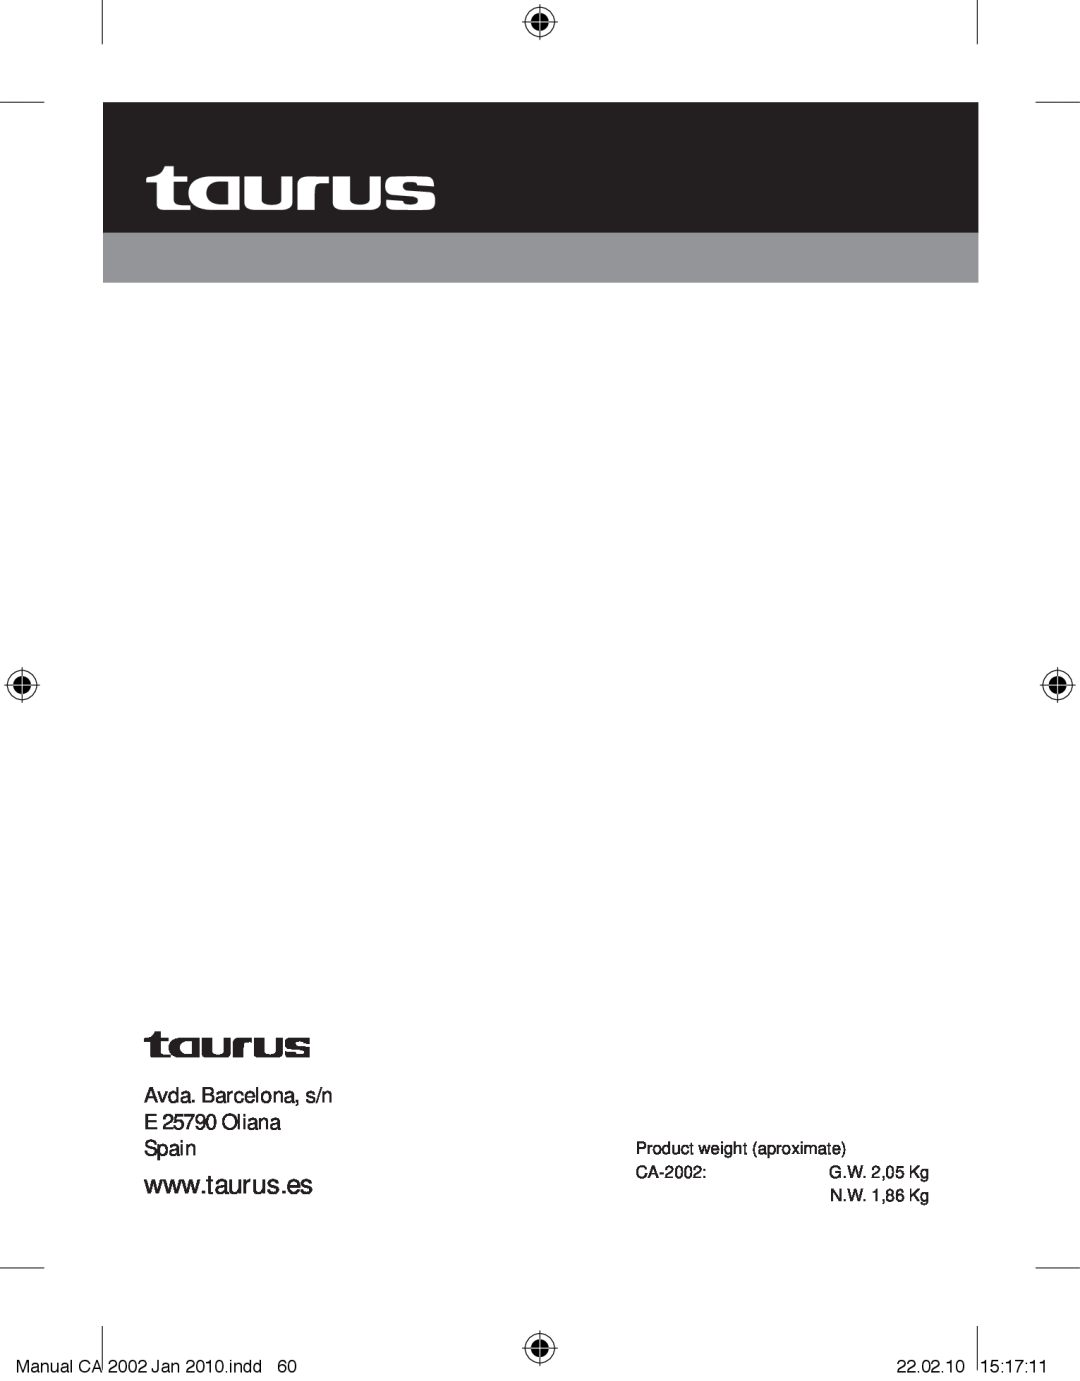 Taurus Group CA-2002 Avda. Barcelona, s/n E 25790 Oliana, Spain, Product weight aproximate, G.W. 2,05 Kg, N.W. 1,86 Kg 